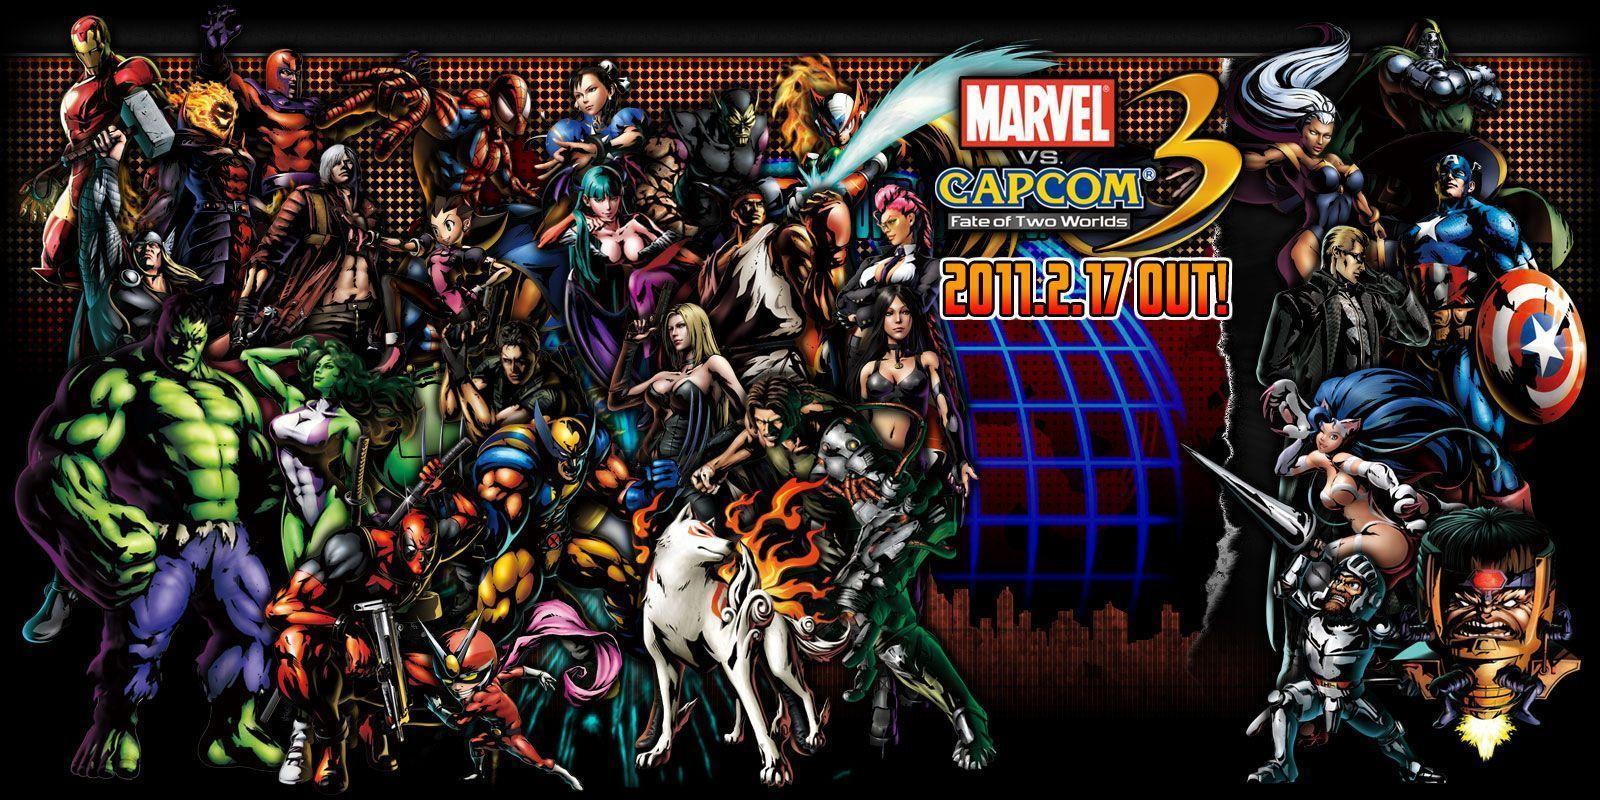 Marvel Vs Capcom 3 wallpaper Database